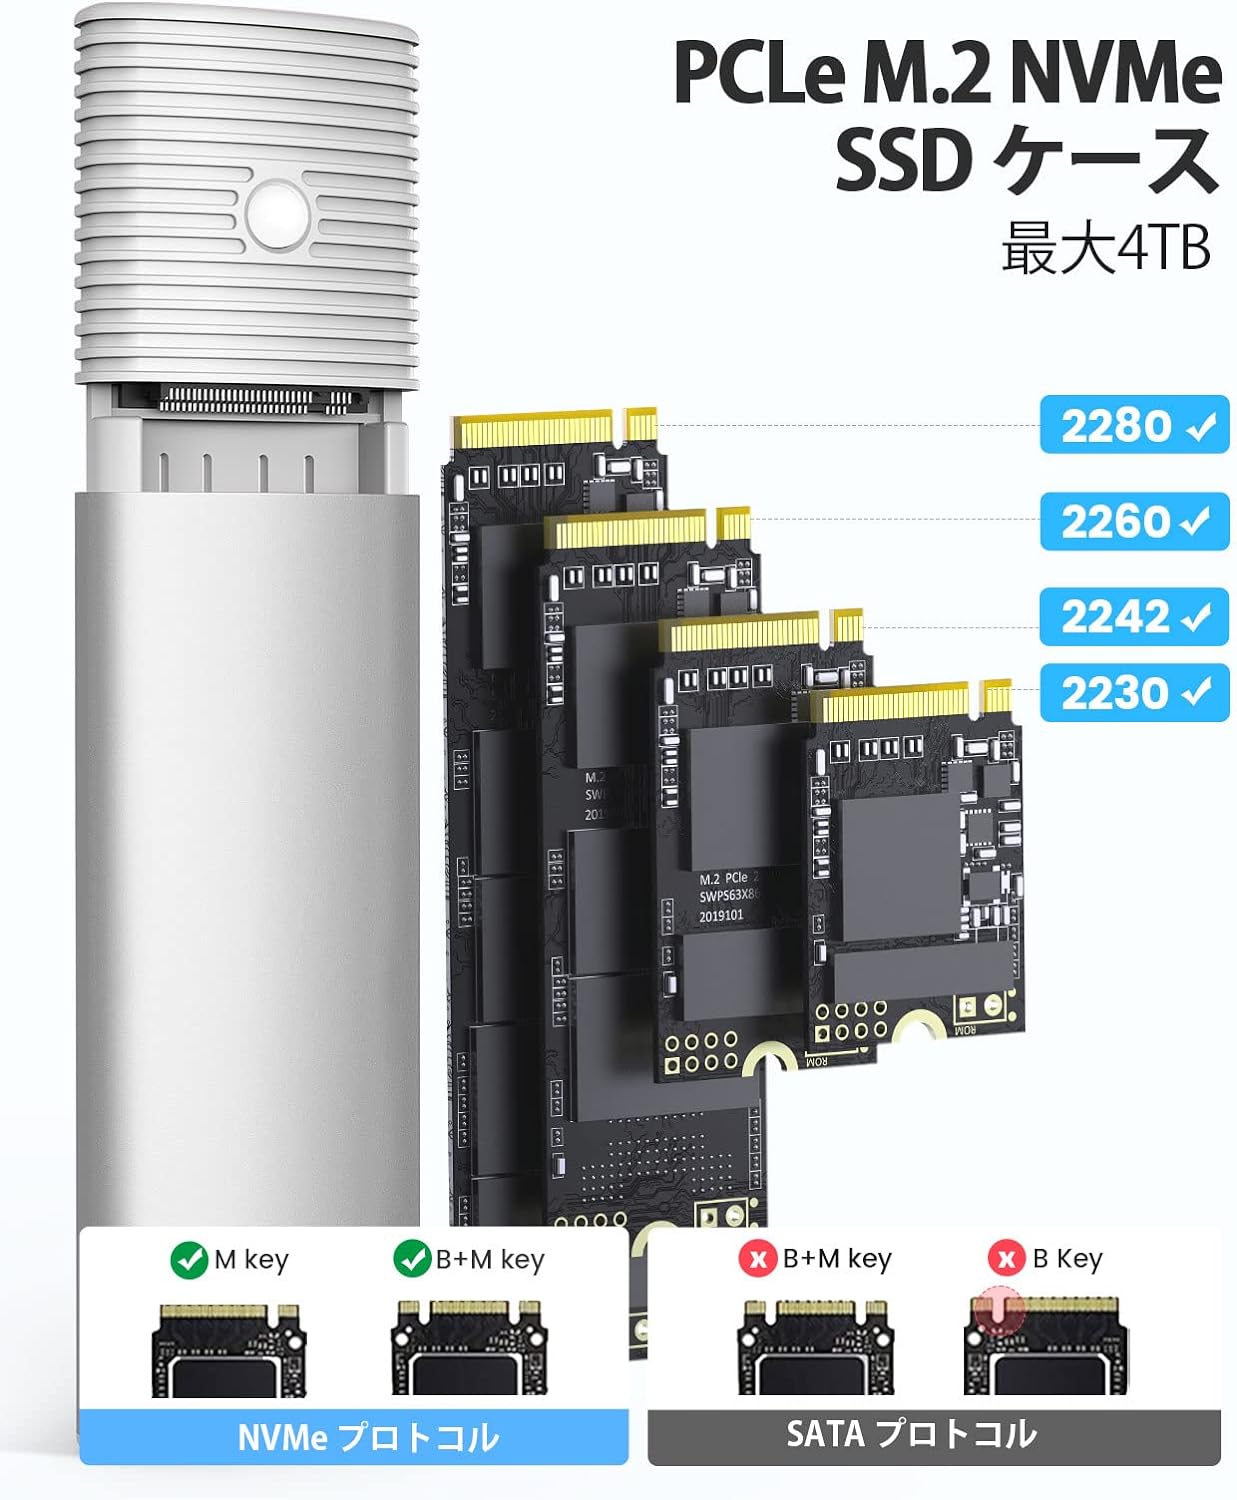 M.2 SSD 外付けケース M.2 NVME/PCIE SSD ケース 10Gbps USB C SSD ケース USB 3.2 M.2 NVMe ケース アルミ制 Thunderbolt 3 対応 4TB 2230/2242 /2260/2280 PCIe M-Key 対応 工具不要 【NVME/PCIE専用】 (ホワイトPWM2-G2-WH)